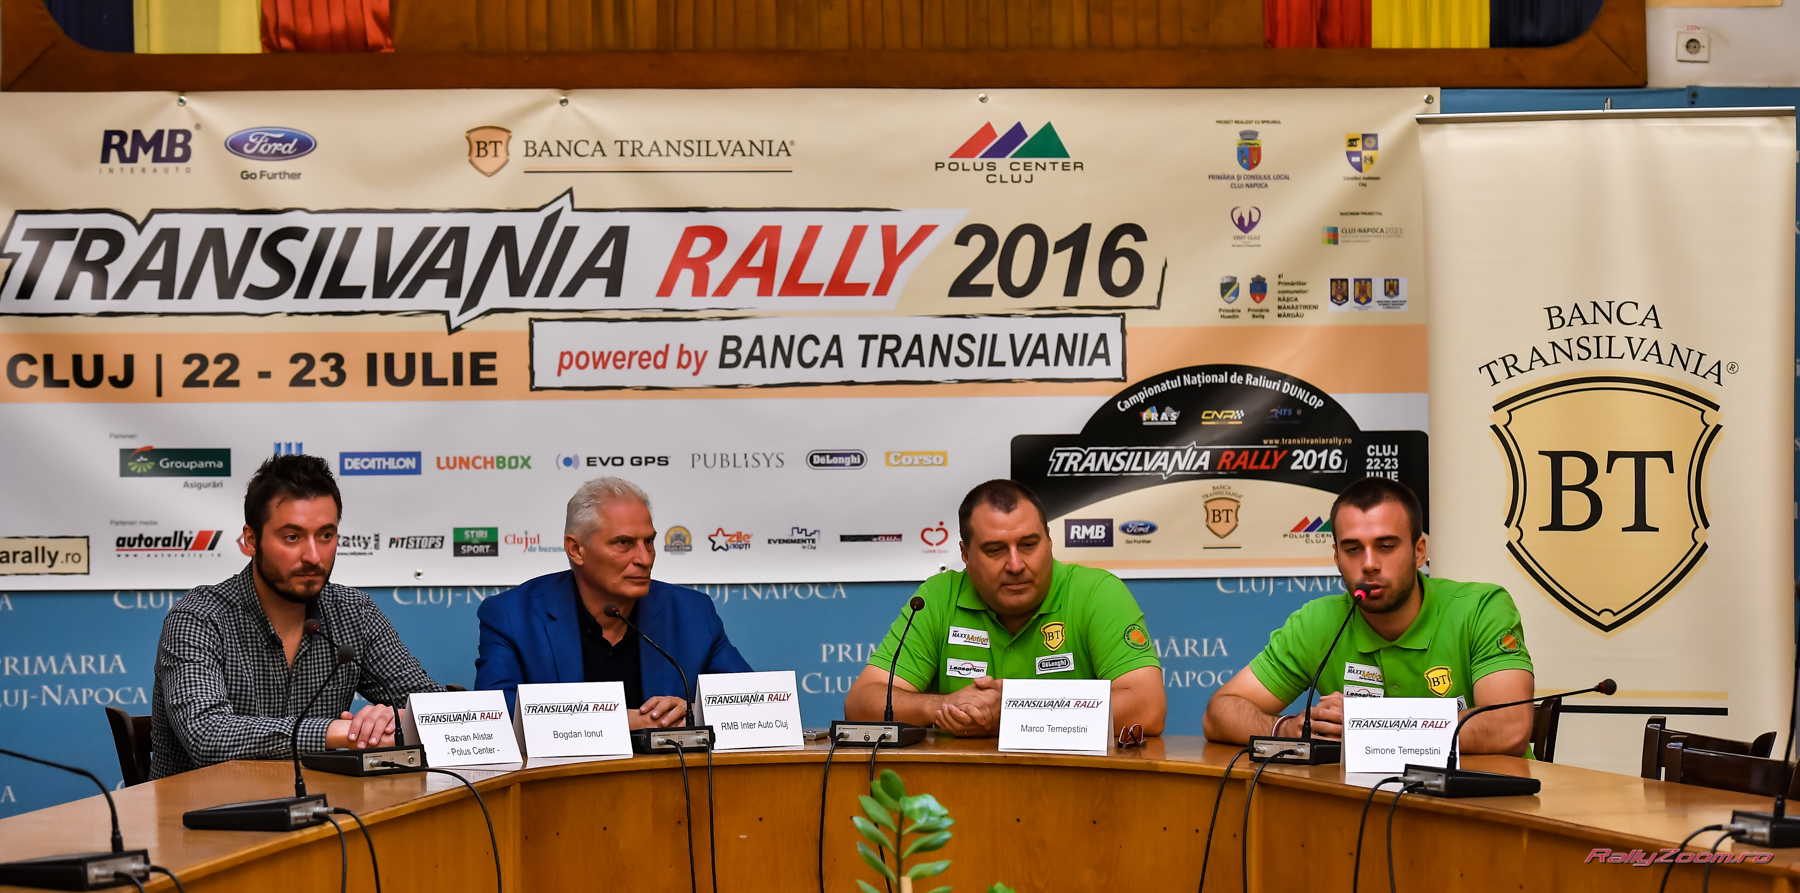 Transilvania Rally powered by Banca Transilvania